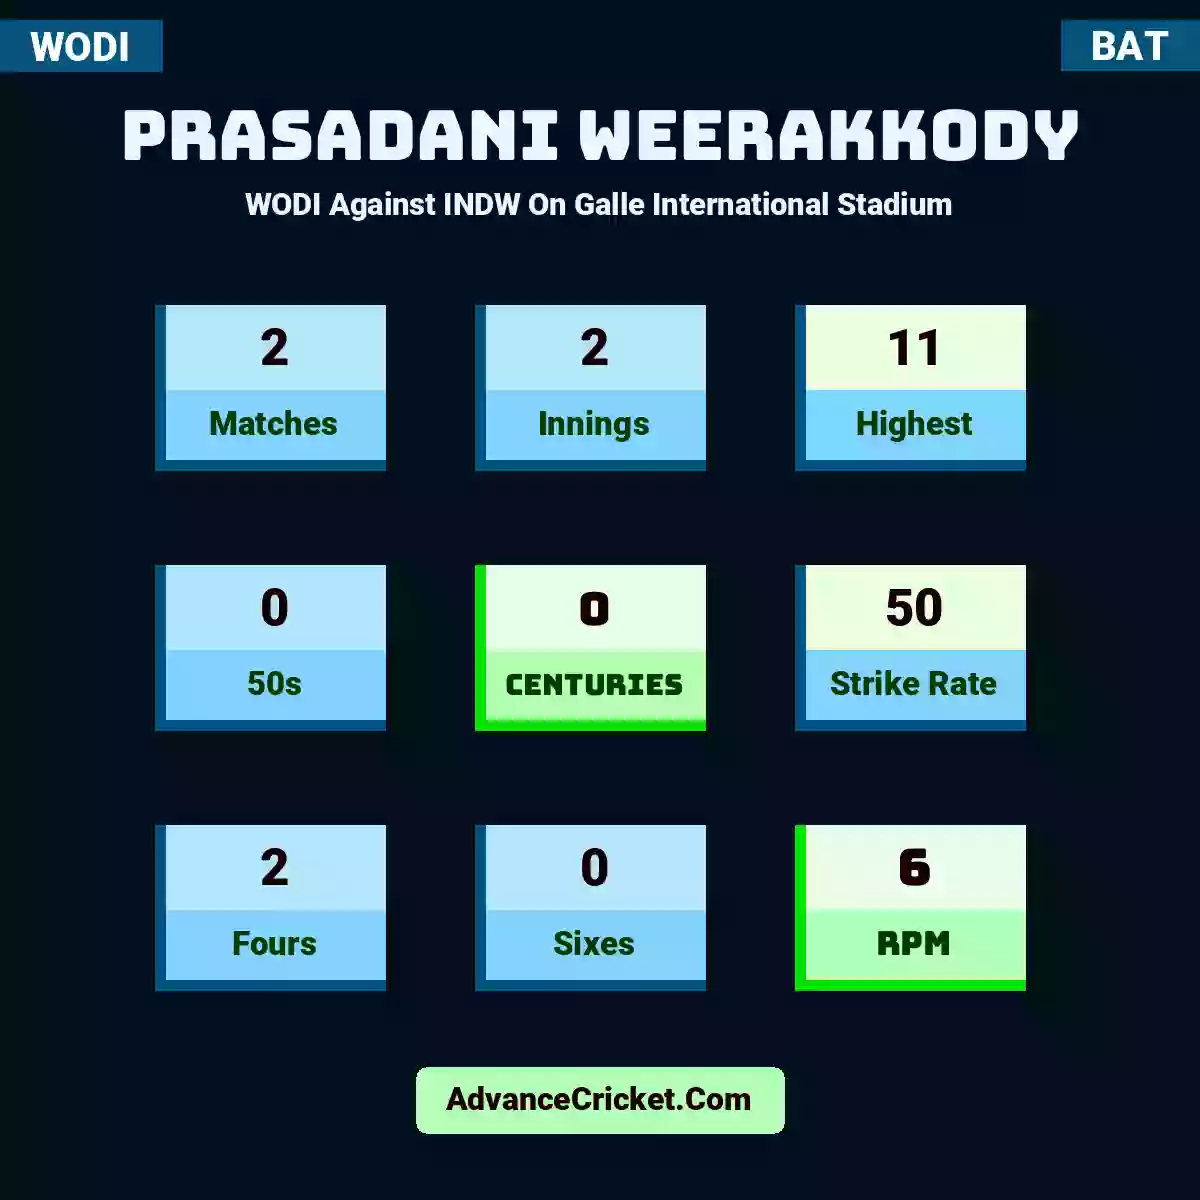 Prasadani Weerakkody WODI  Against INDW On Galle International Stadium, Prasadani Weerakkody played 2 matches, scored 11 runs as highest, 0 half-centuries, and 0 centuries, with a strike rate of 50. P.Weerakkody hit 2 fours and 0 sixes, with an RPM of 6.